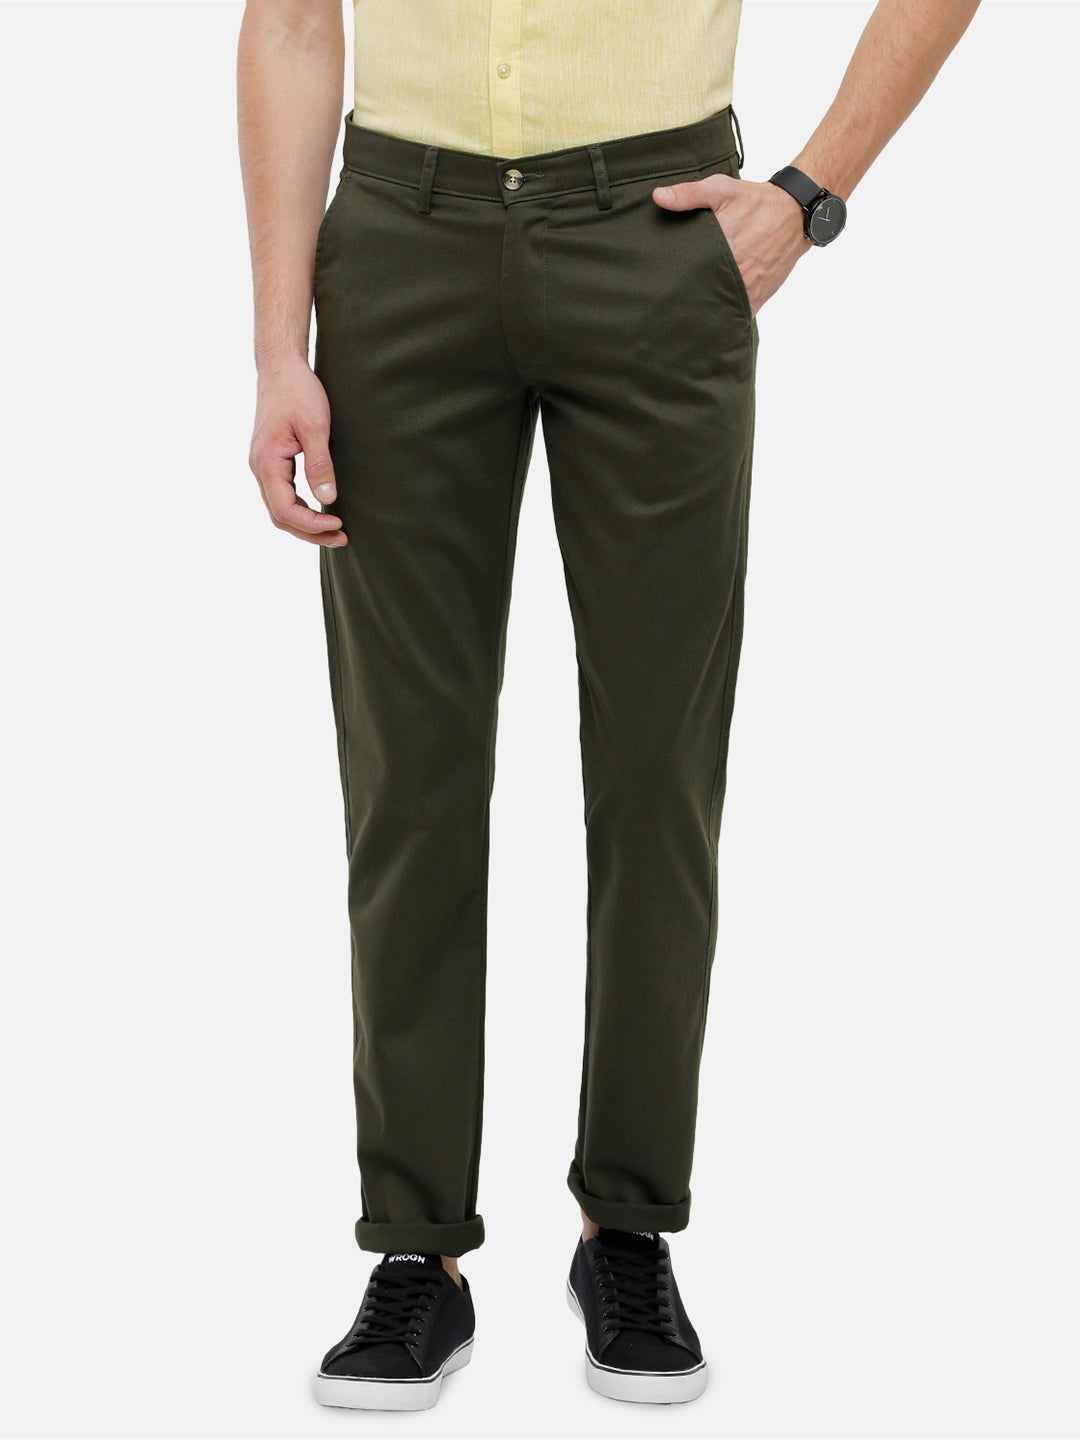 Buy Crocodile Casual Slim Fit Solid Khaki Trousers for Men